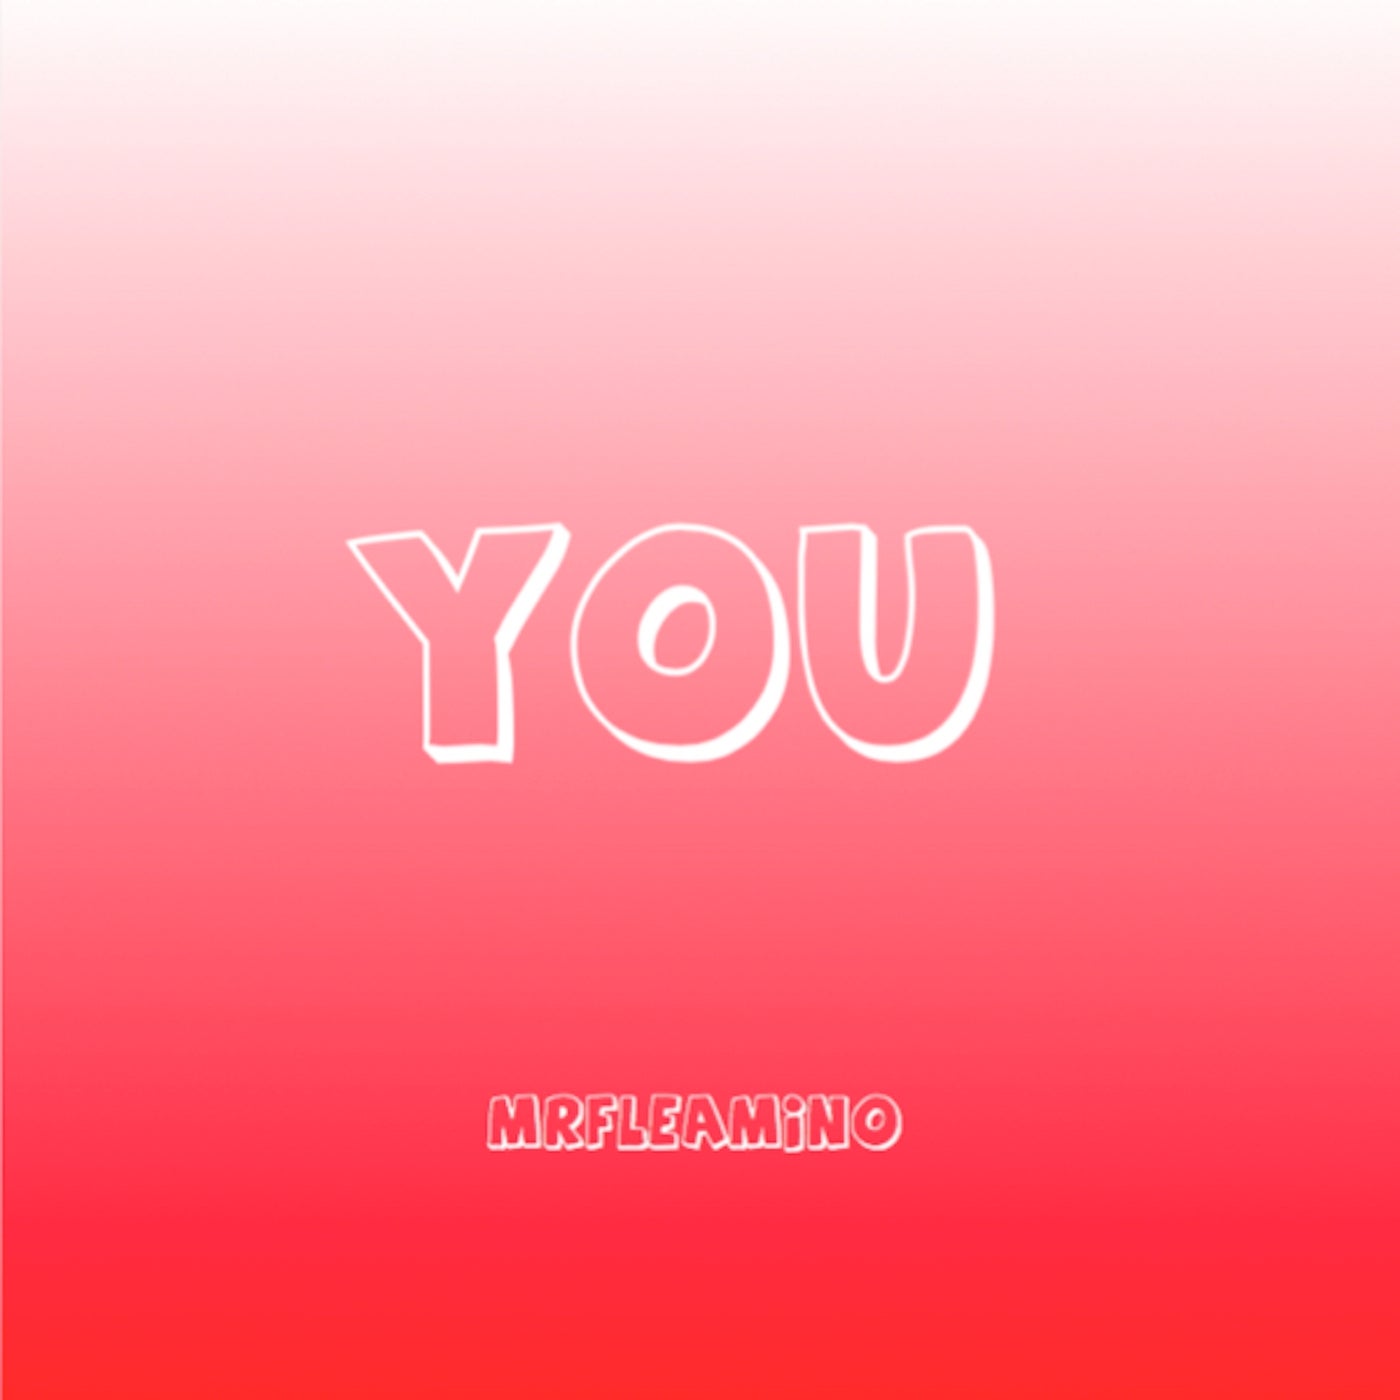 Mrfleamino - You [738993]